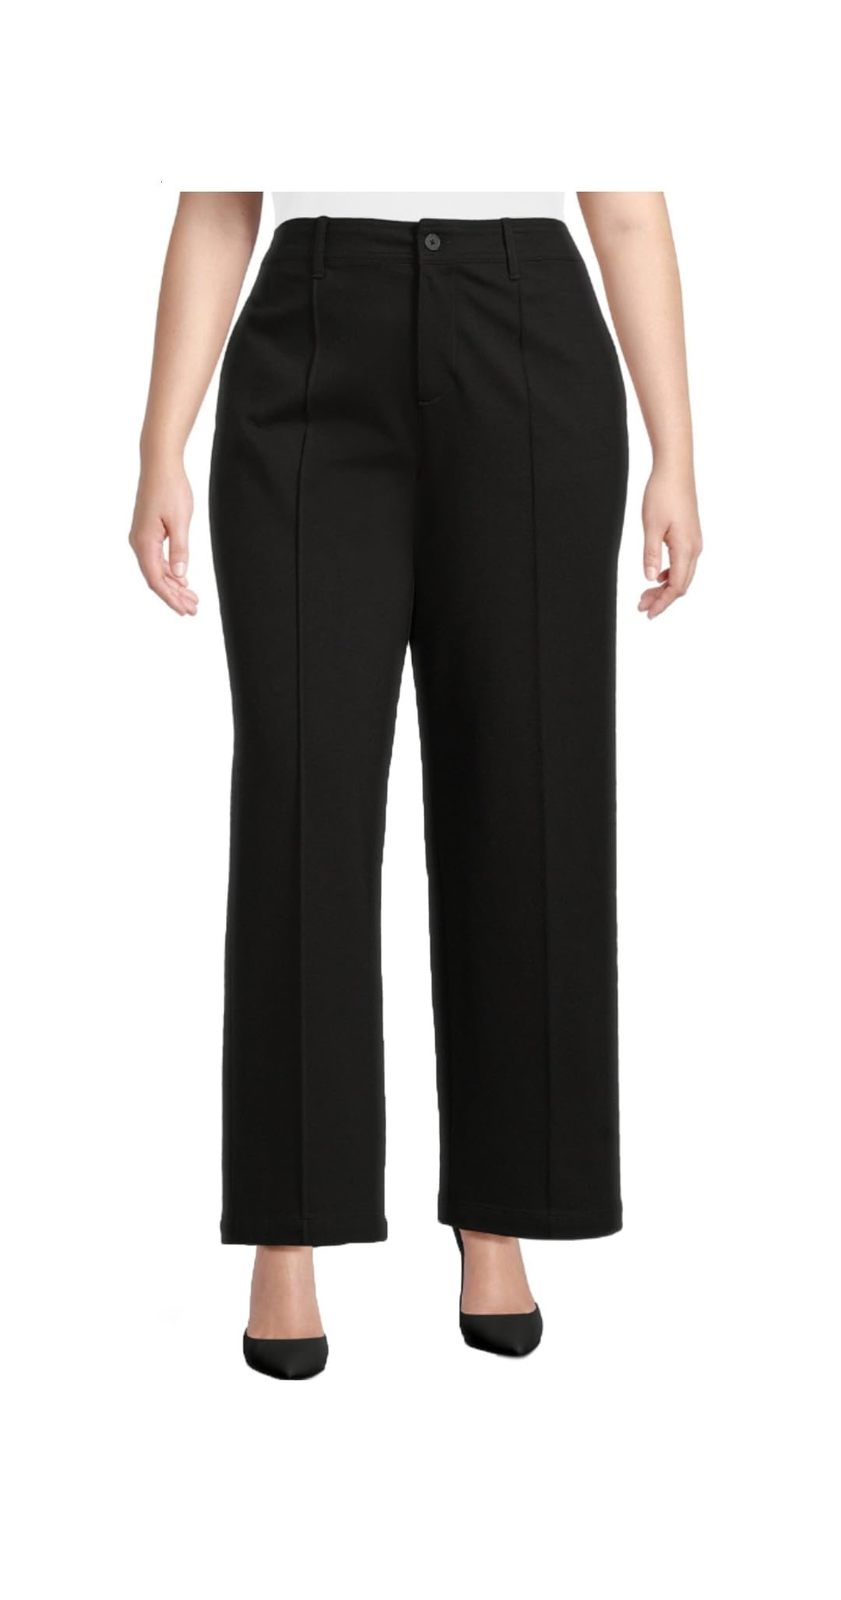 Terra & Sky Women's Plus Size Dress Pants and similar items